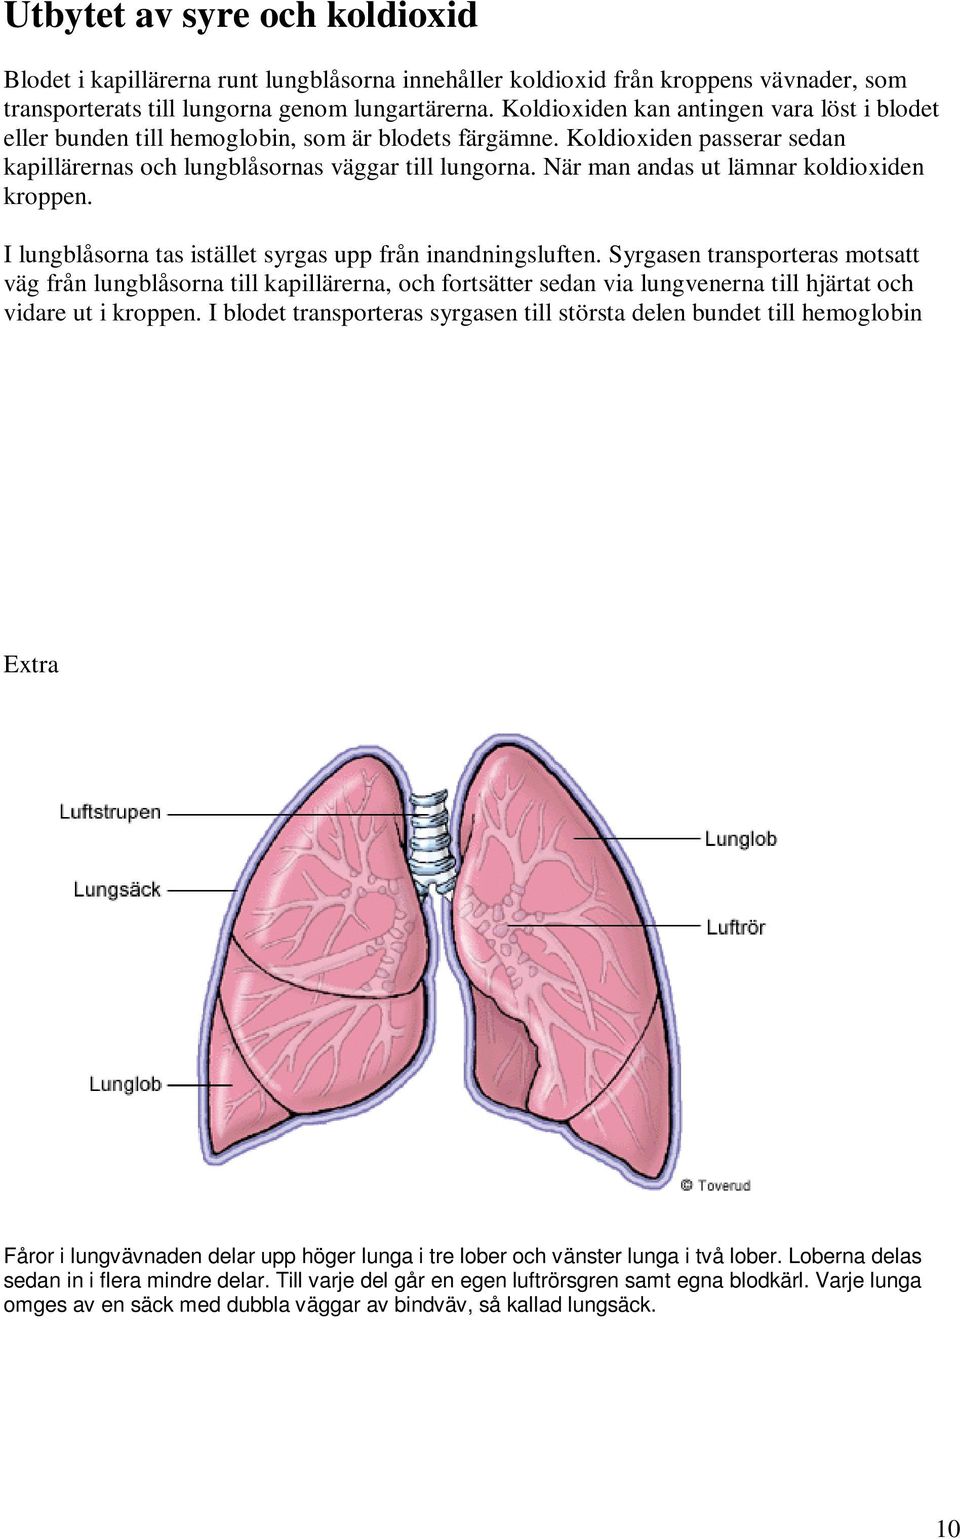 Lungornas uppbyggnad